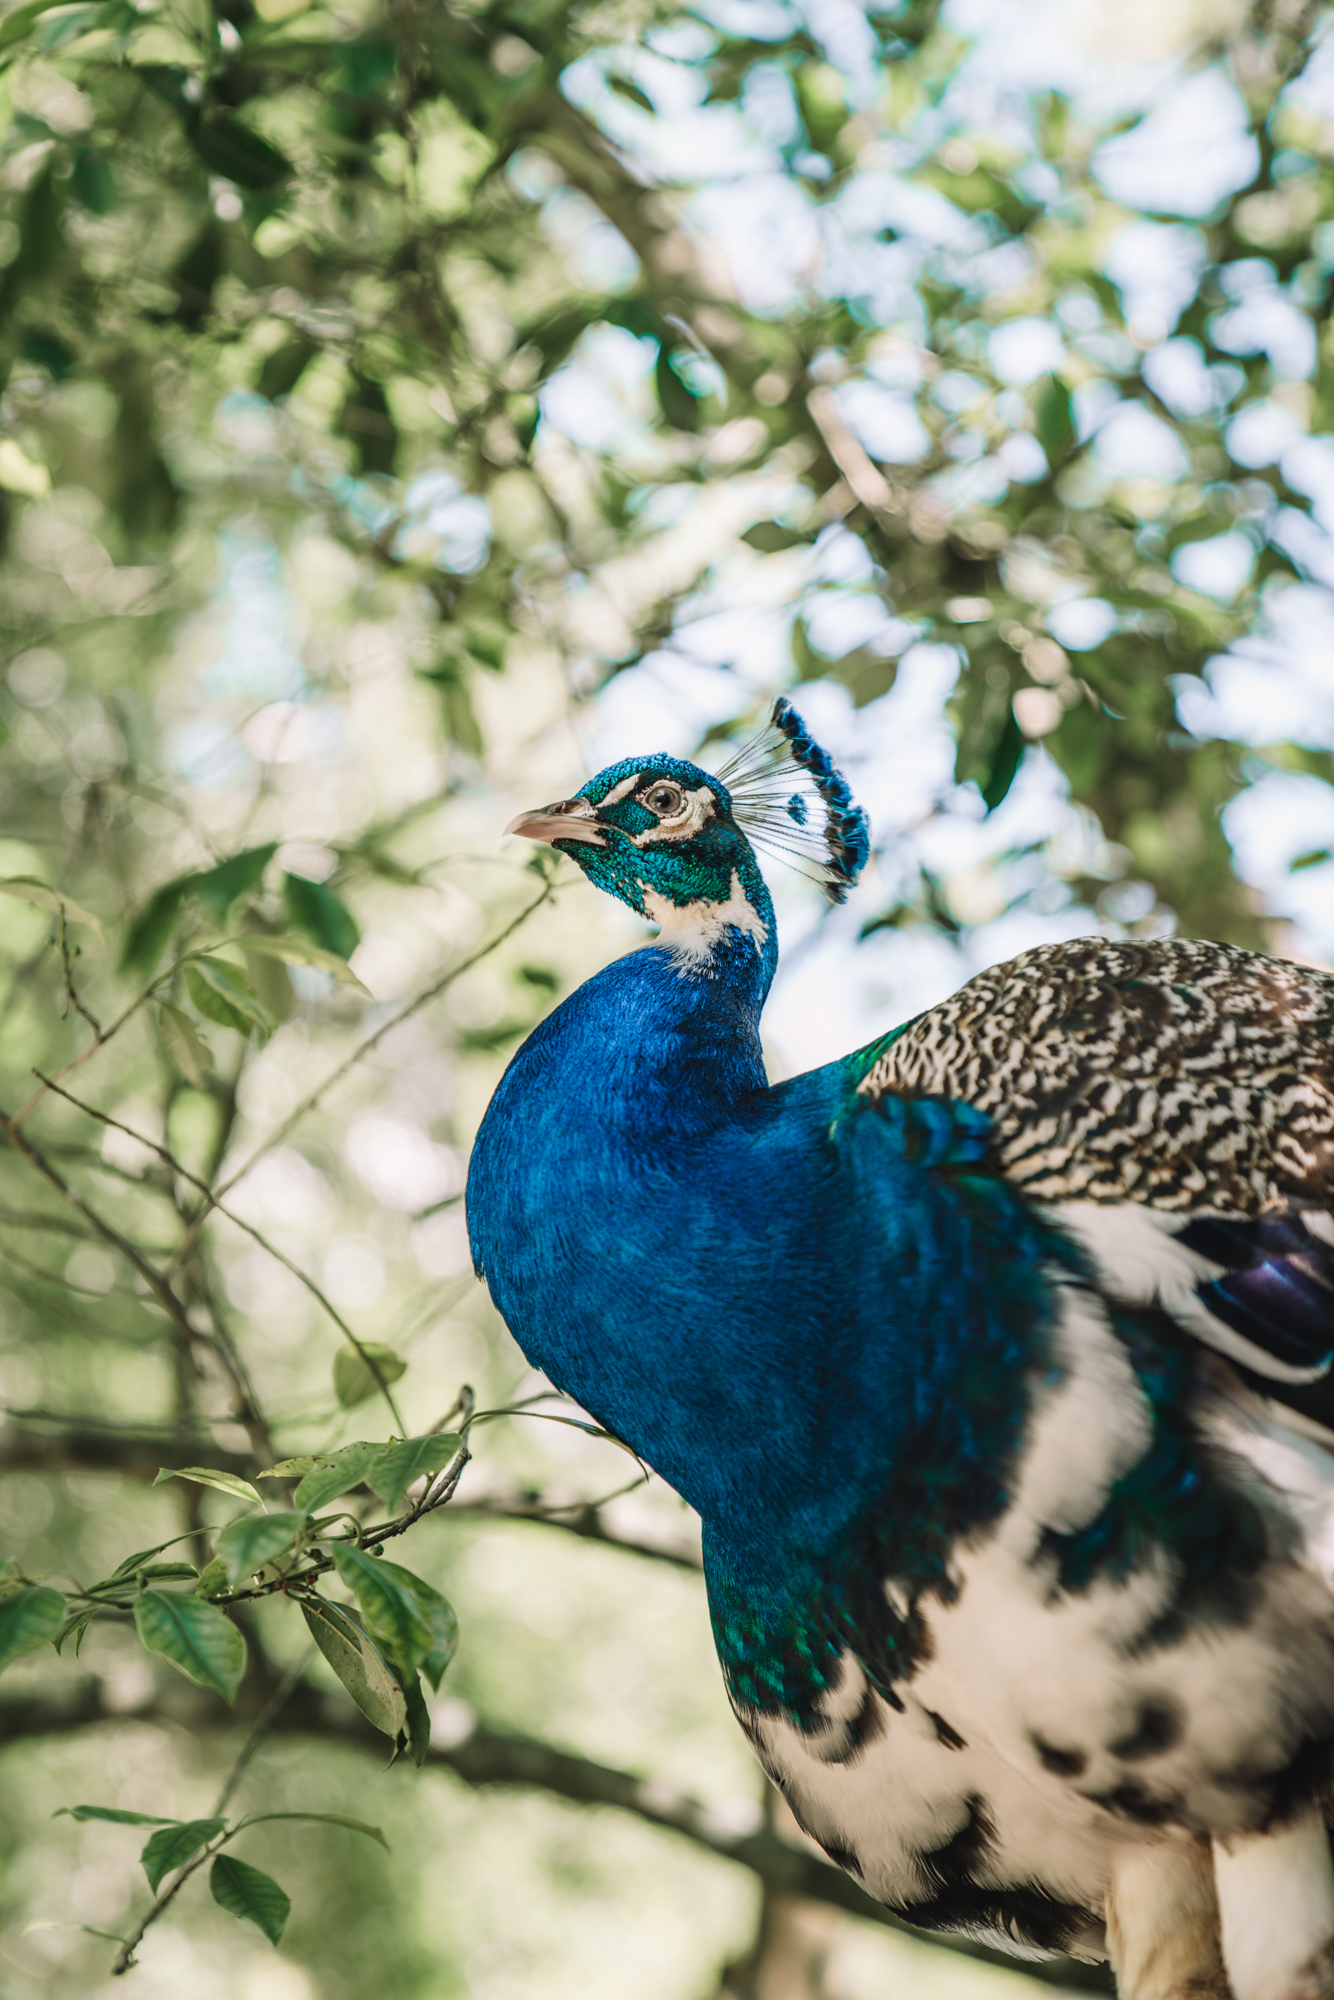 a beautiful blue peacock